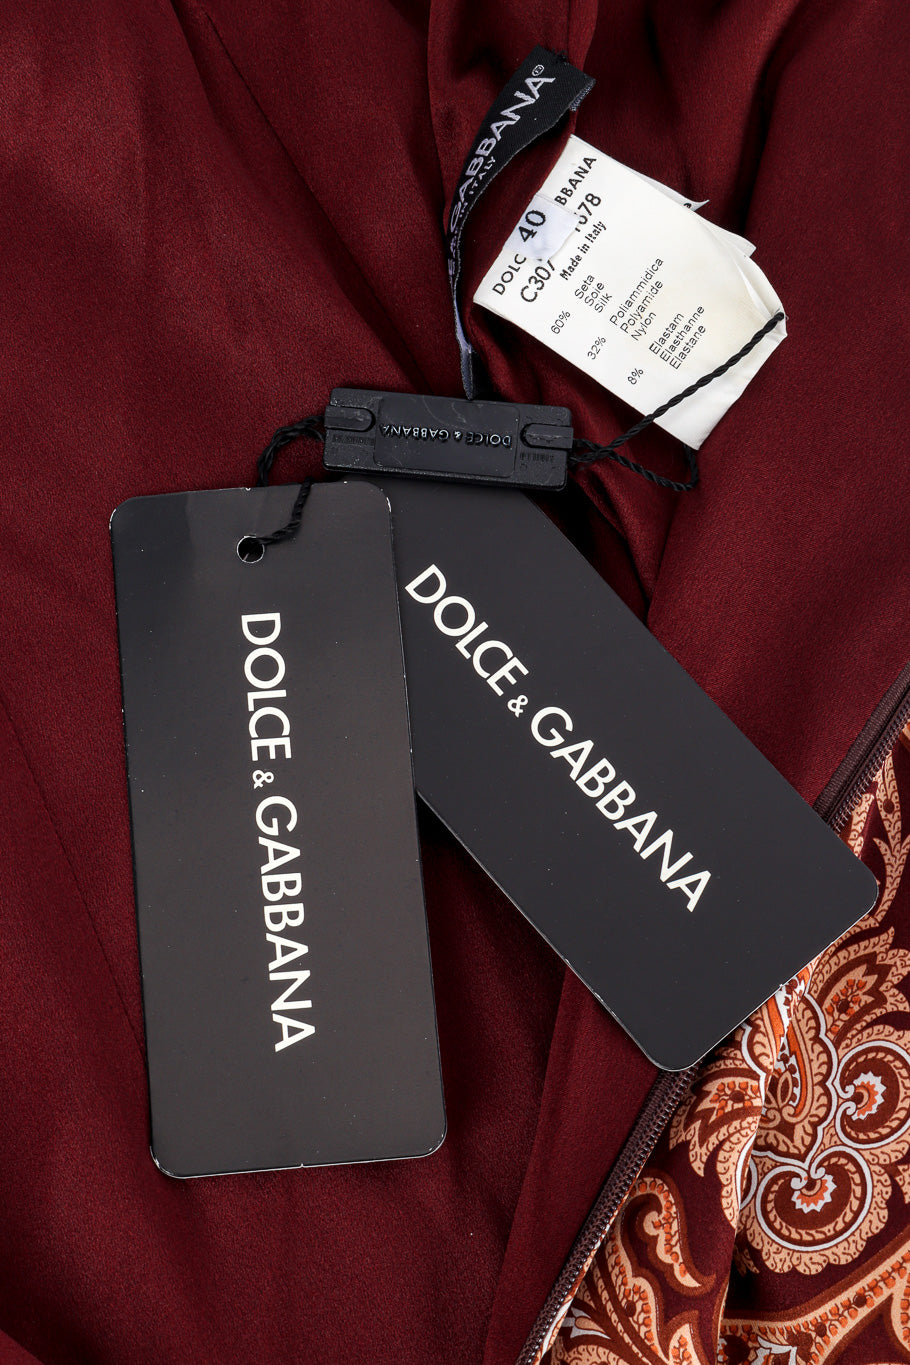 Sheath dress by Dolce & Gabbana tags and label @recessla